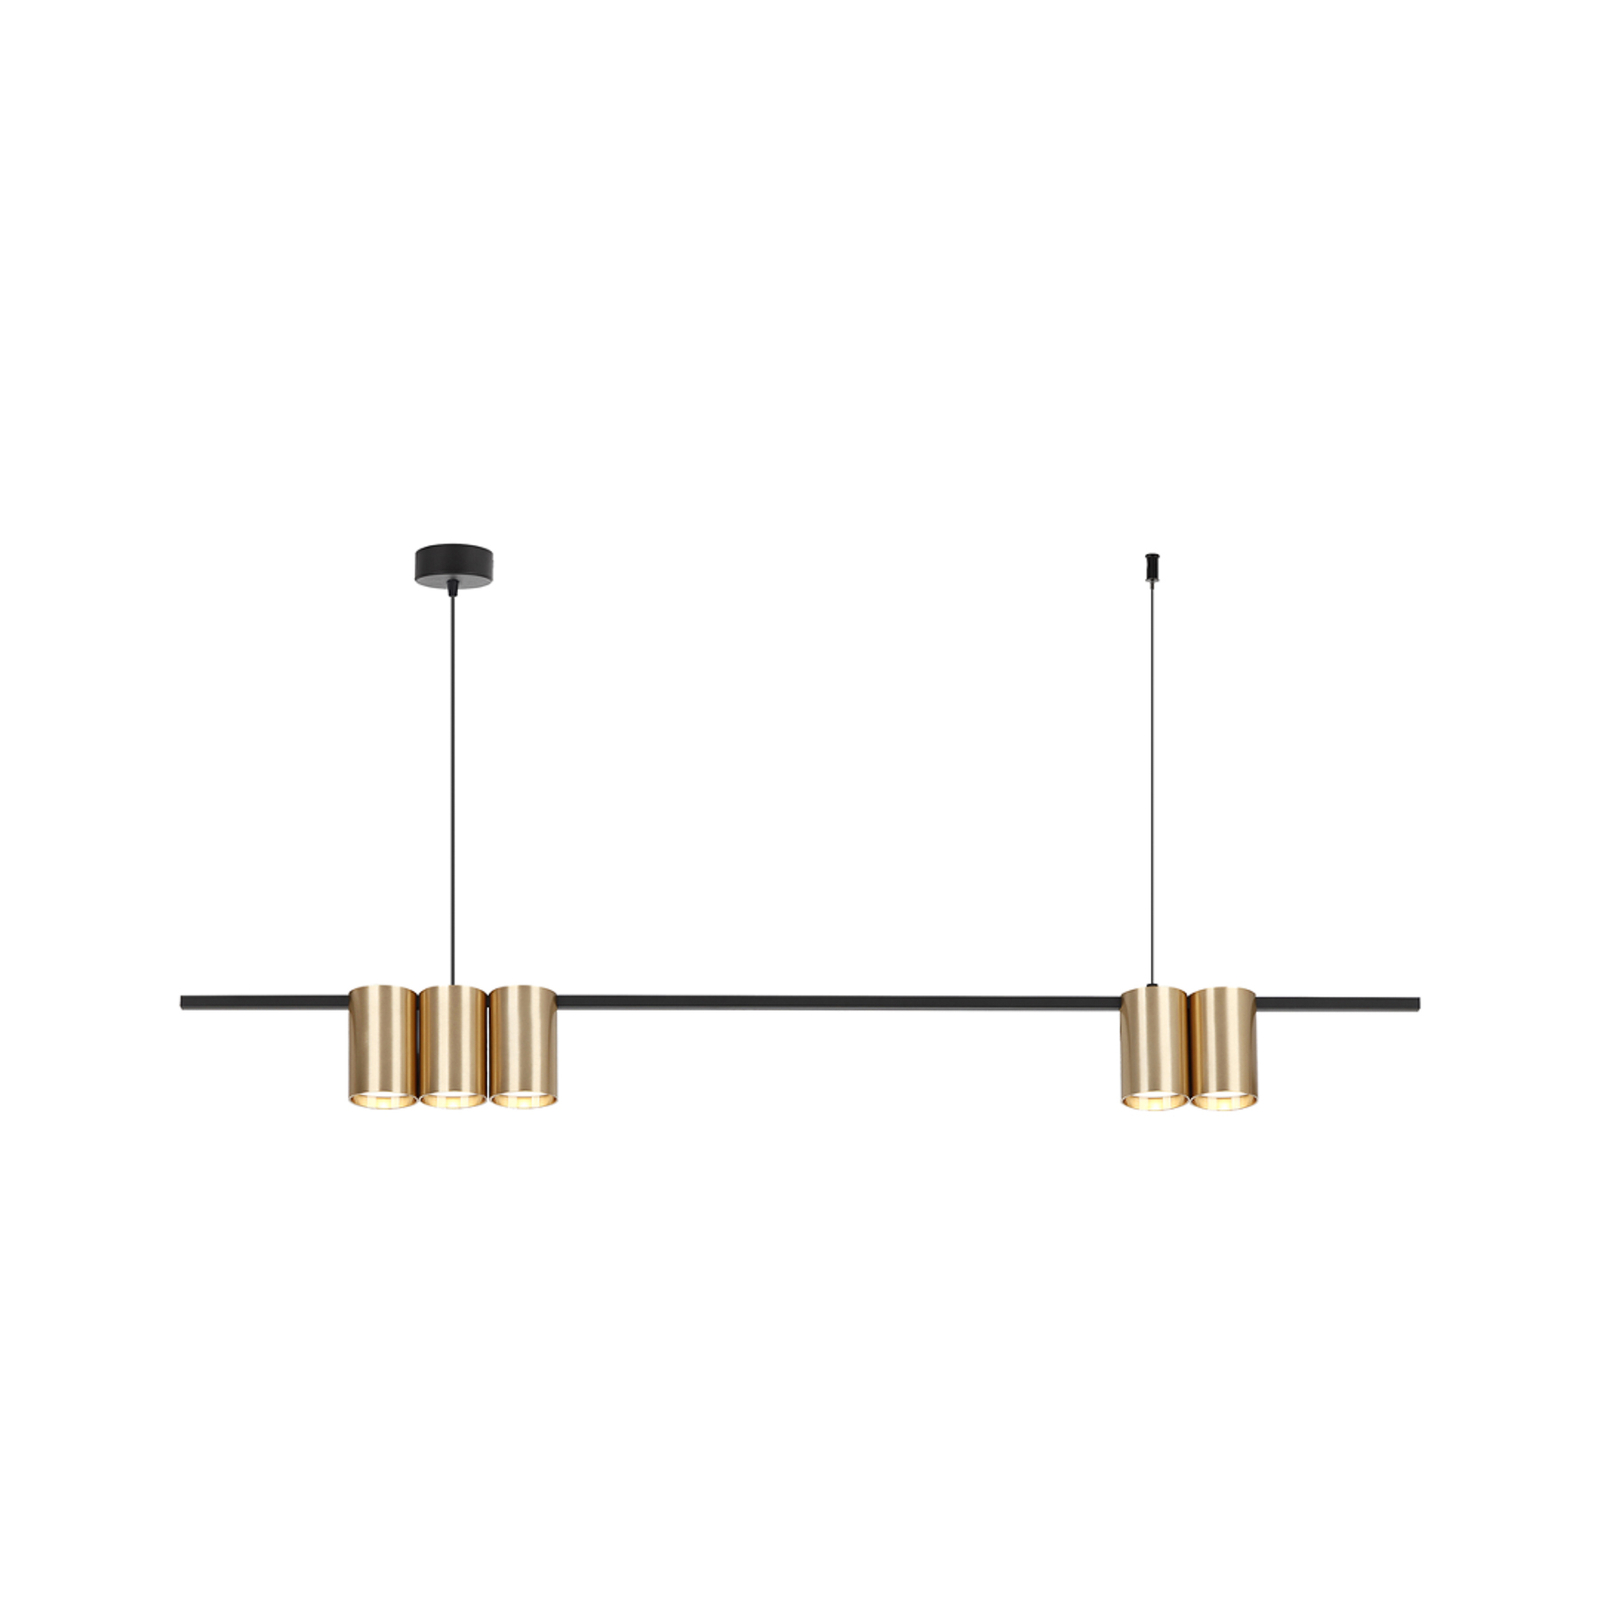 Hanglamp Genesis, aluminium zwart/goud, 5 x GU10, lengte 100 cm